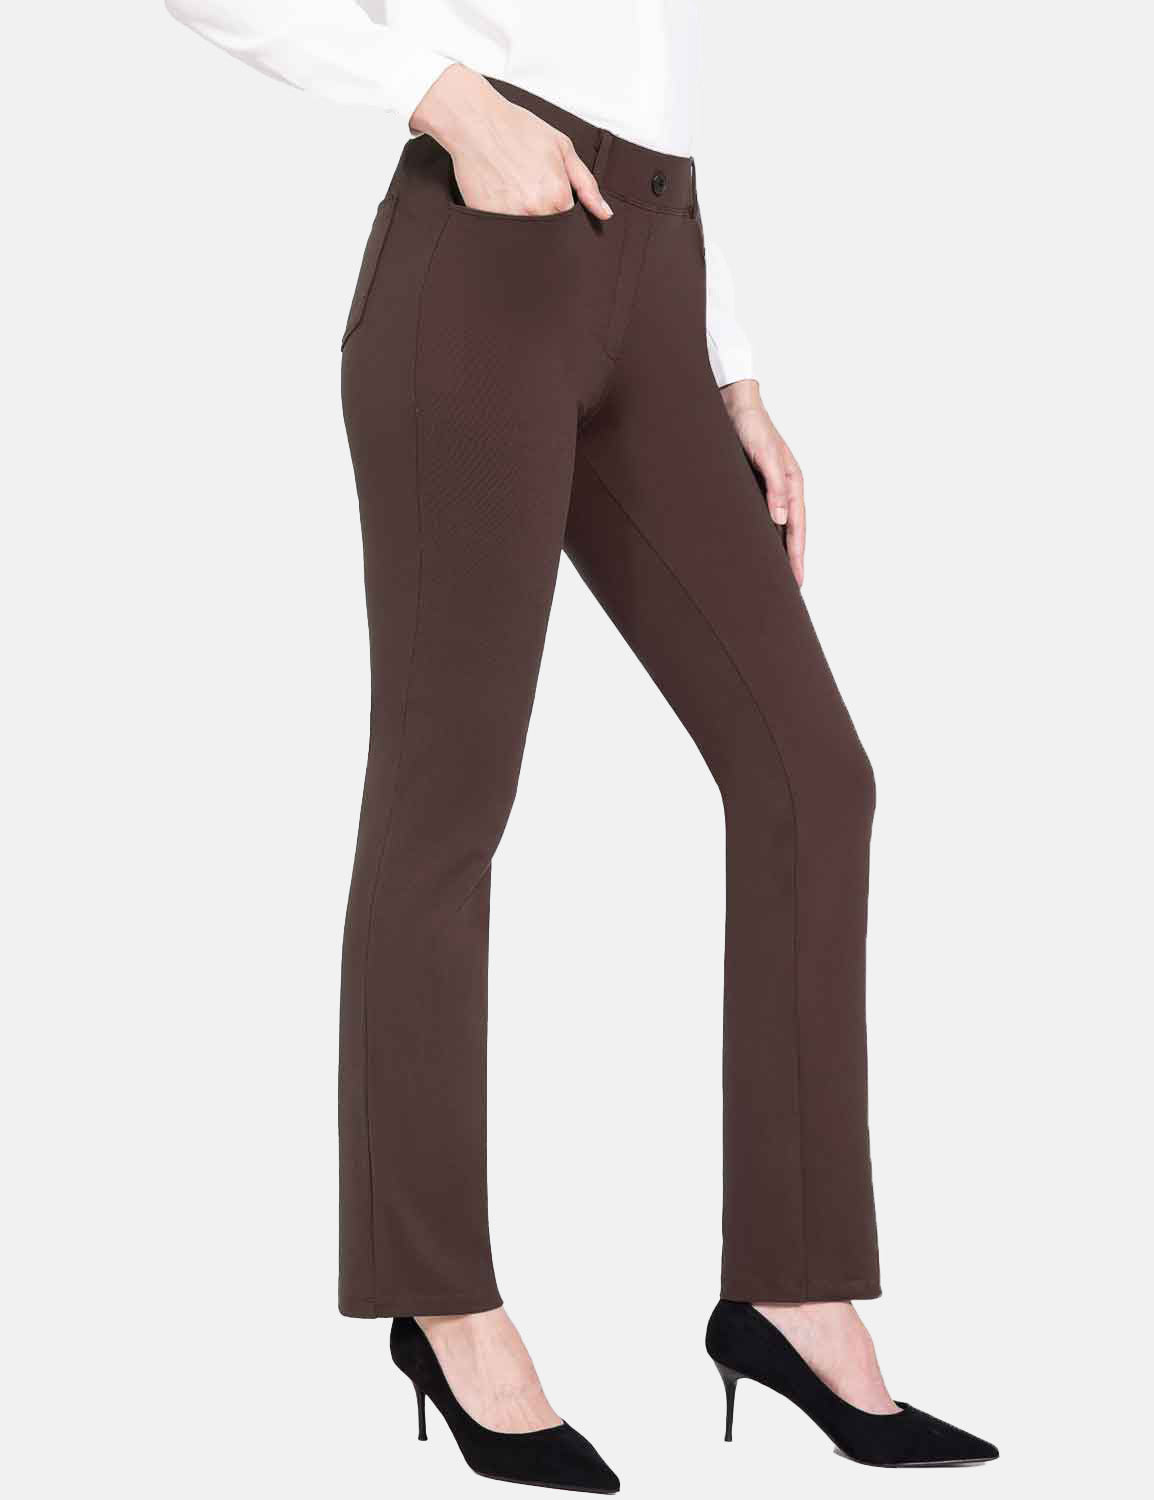 BALEAF Yoga Pants with Pockets for Women Straight Leg High Waisted Slim  Slacks Petite Regular Casual Workout Pants